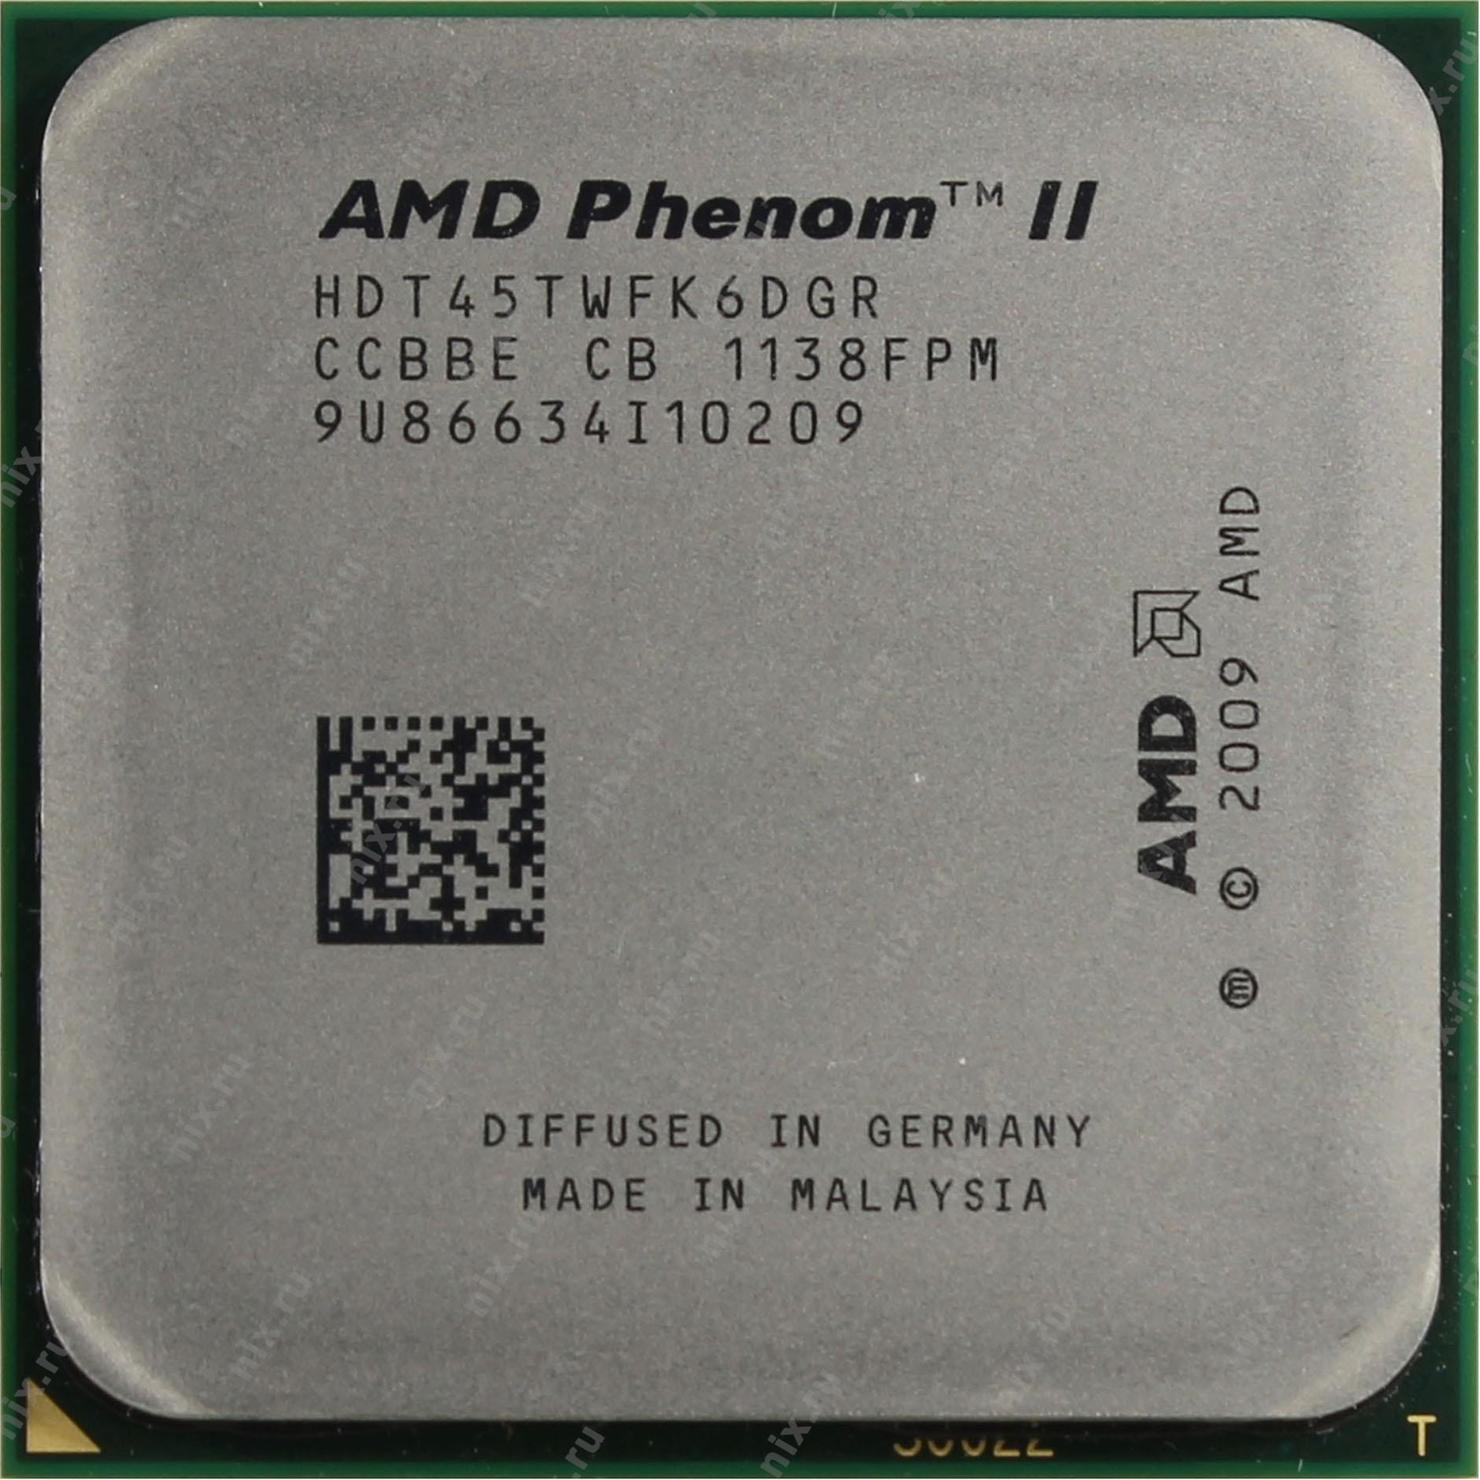 Amd phenom ii x6 купить. AMD Phenom II x6 1045t. AMD Phenom™ II x6 1605t. AMD Phenom x4 970. AMD Phenom II x6 Thuban 1045t am3, 6 x 2700 МГЦ.